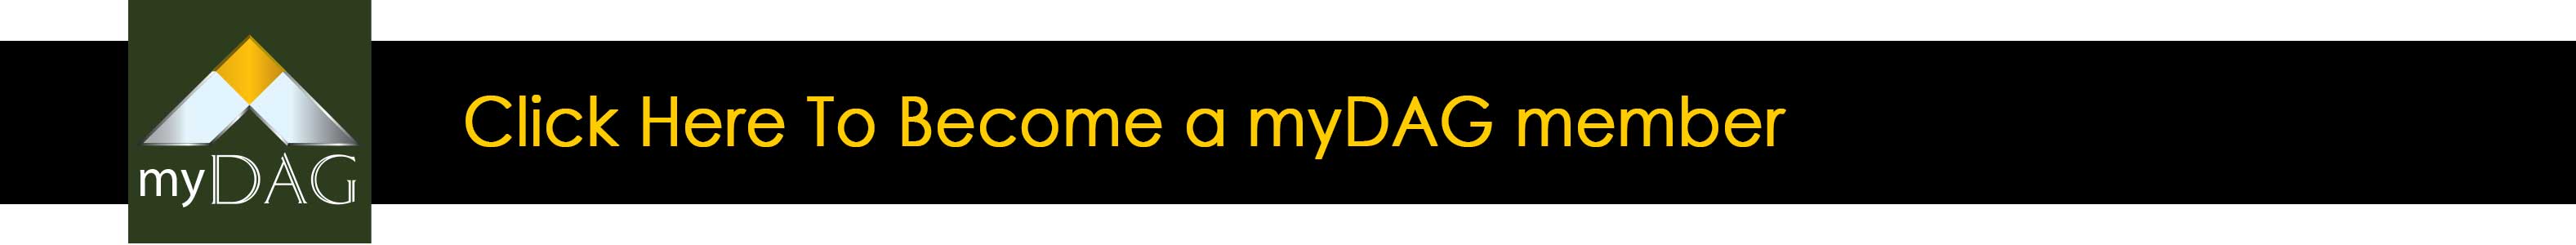 myDAG Sign Up